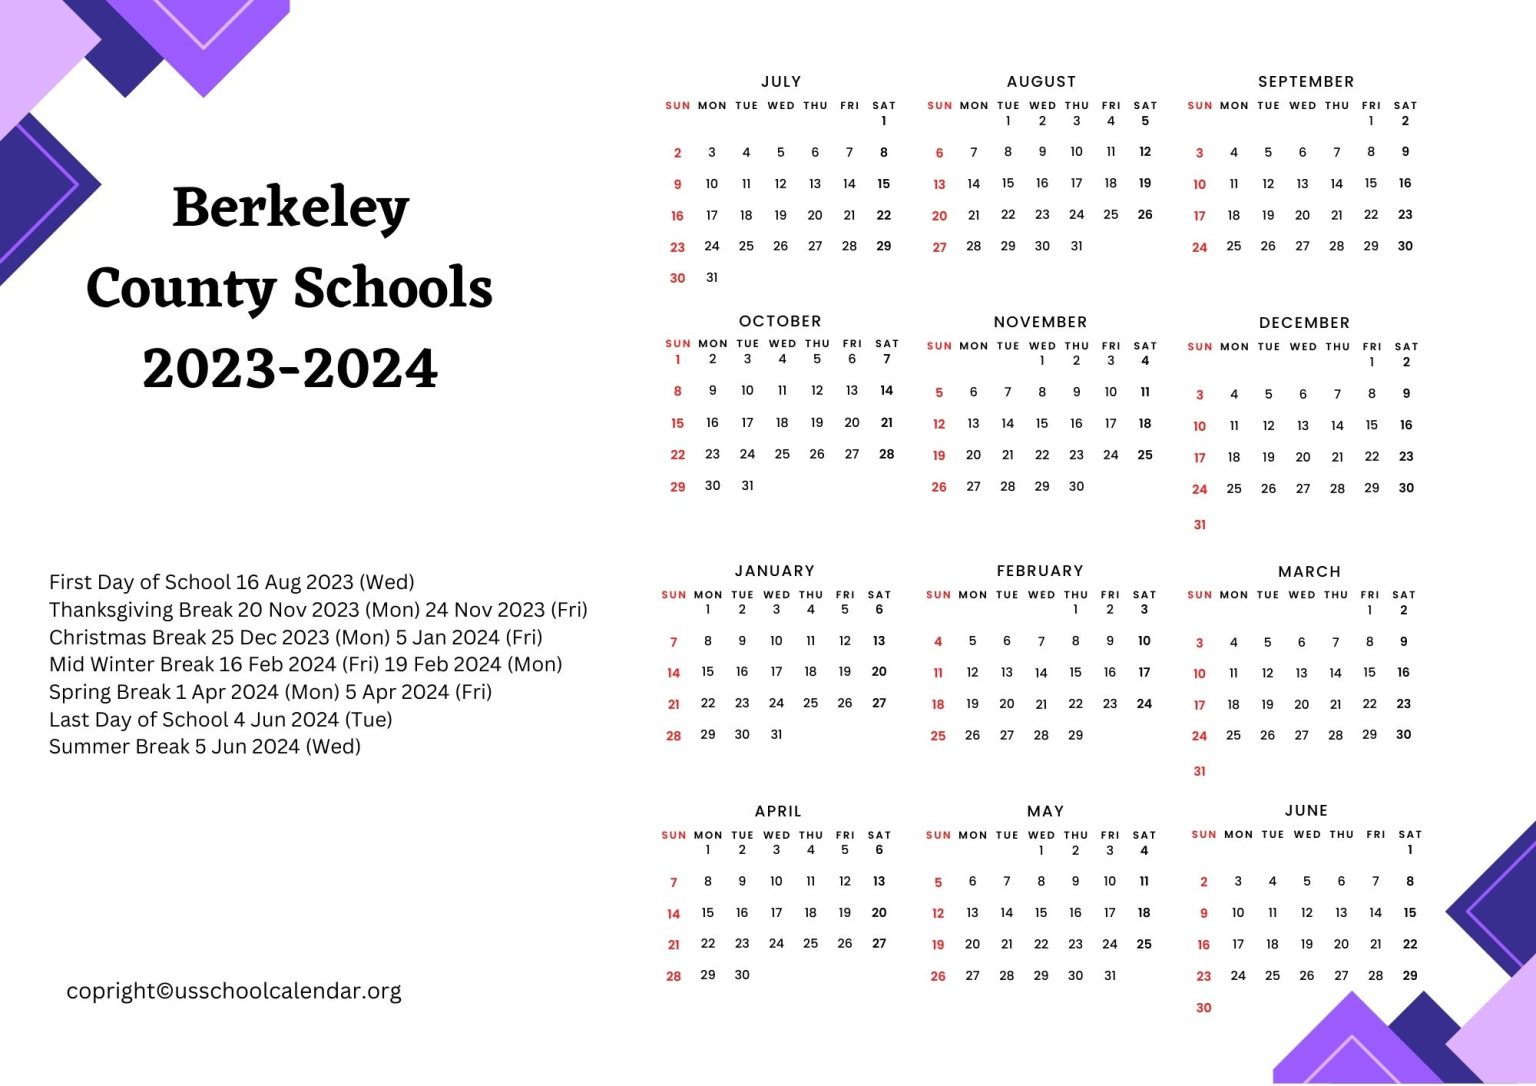 berkeley-county-schools-calendar-with-holidays-2023-2024